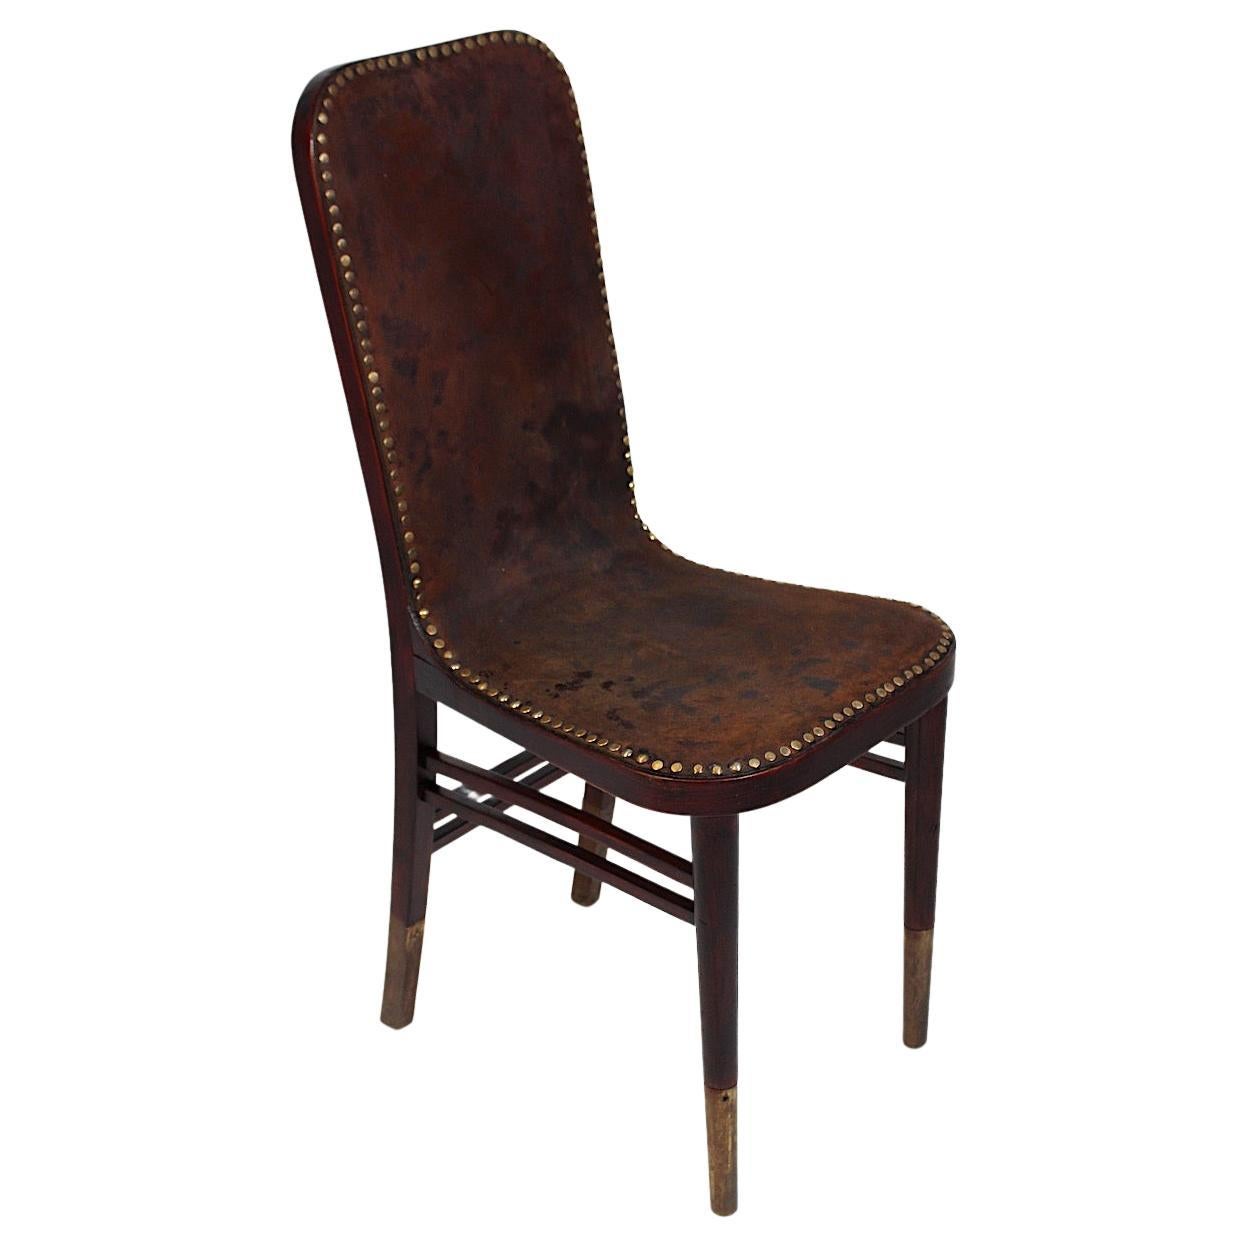 Jugendstil Side Chair Beech Leather by Joseph Urban Gebrüder Thonet 1903 Vienna For Sale